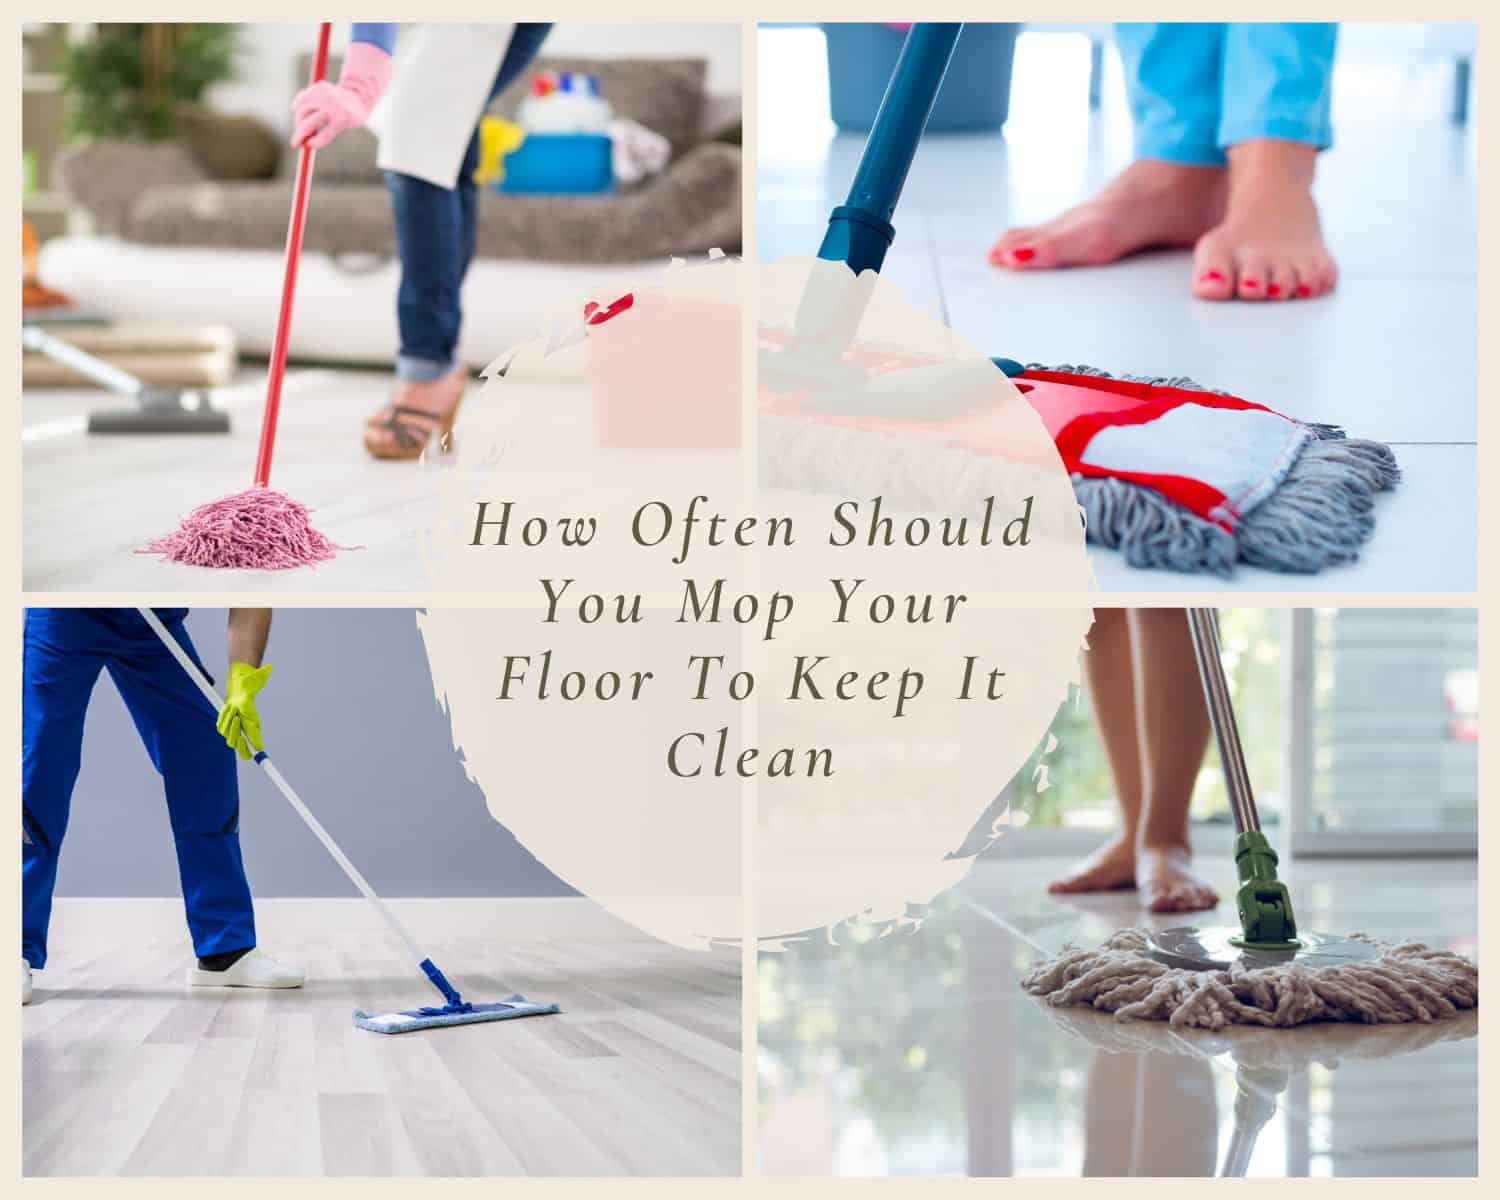 https://www.vintagemeetsglam.com/wp-content/uploads/2022/09/How-Often-Should-You-Mop-Your-Floor-To-Keep-It-Clean-1.jpg